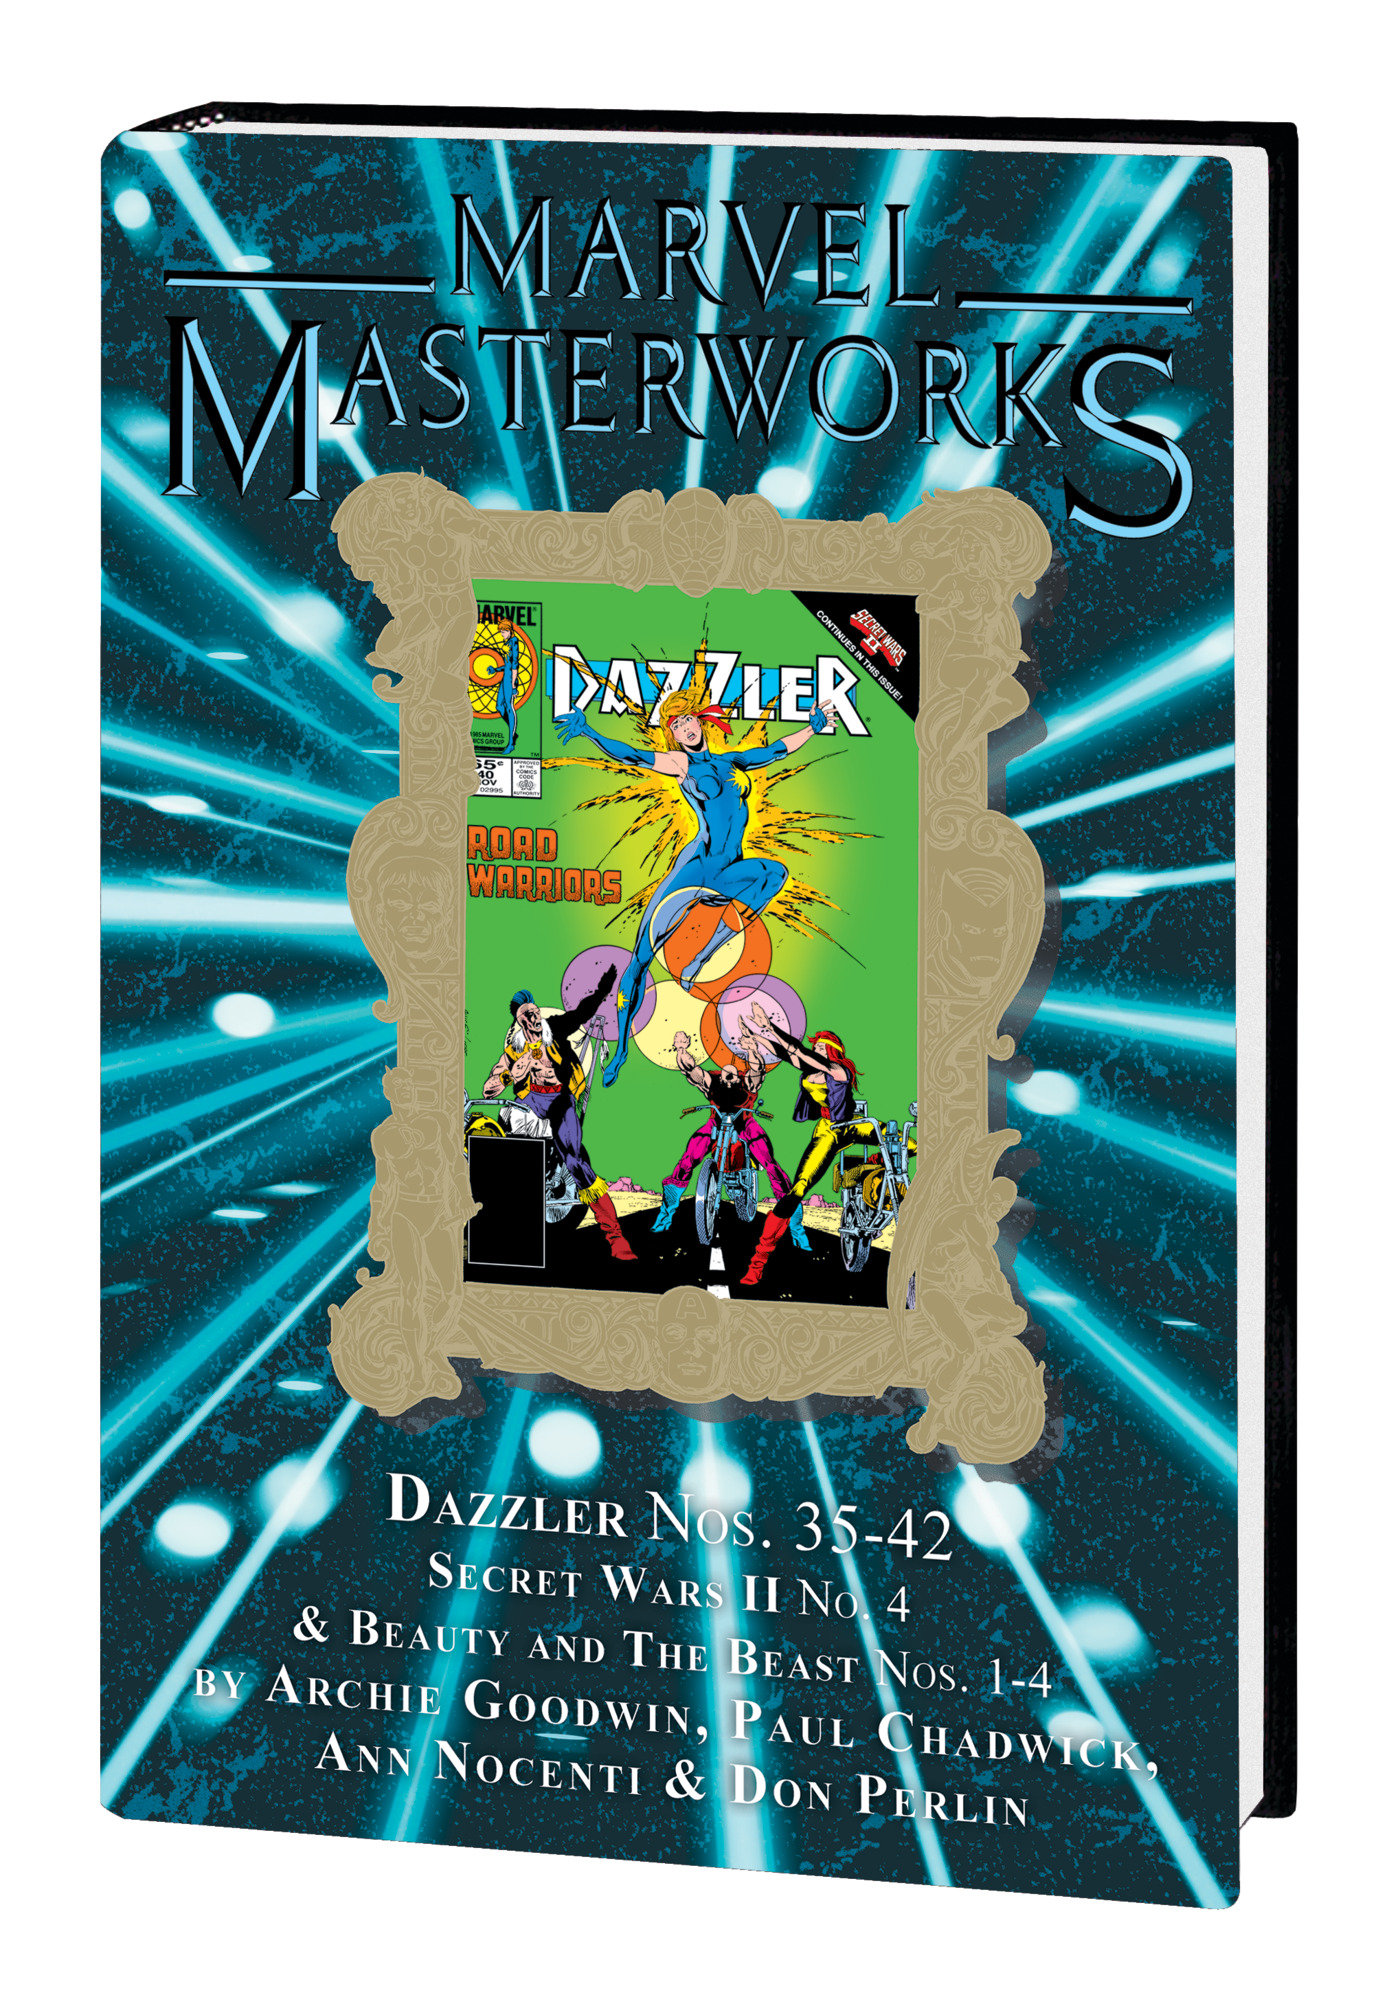 Marvel Masterworks Dazzler Hardcover Volume 4 Direct Market Edition Edition